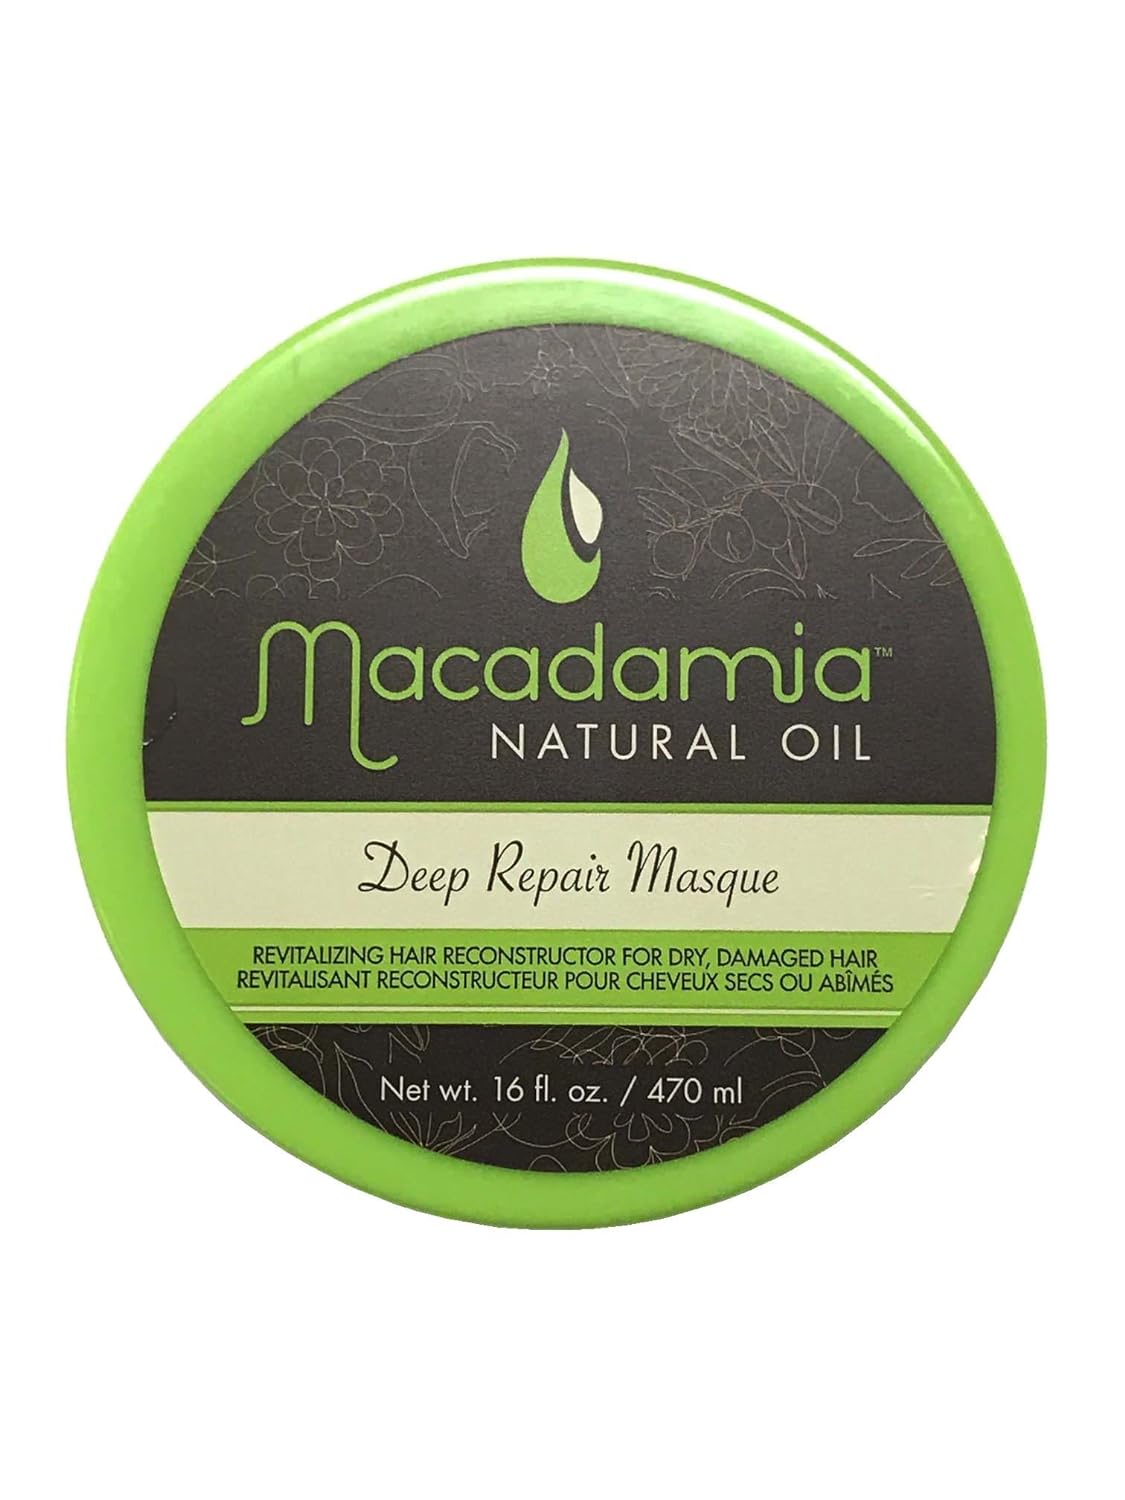 Macadamia natural oil deep repair masque